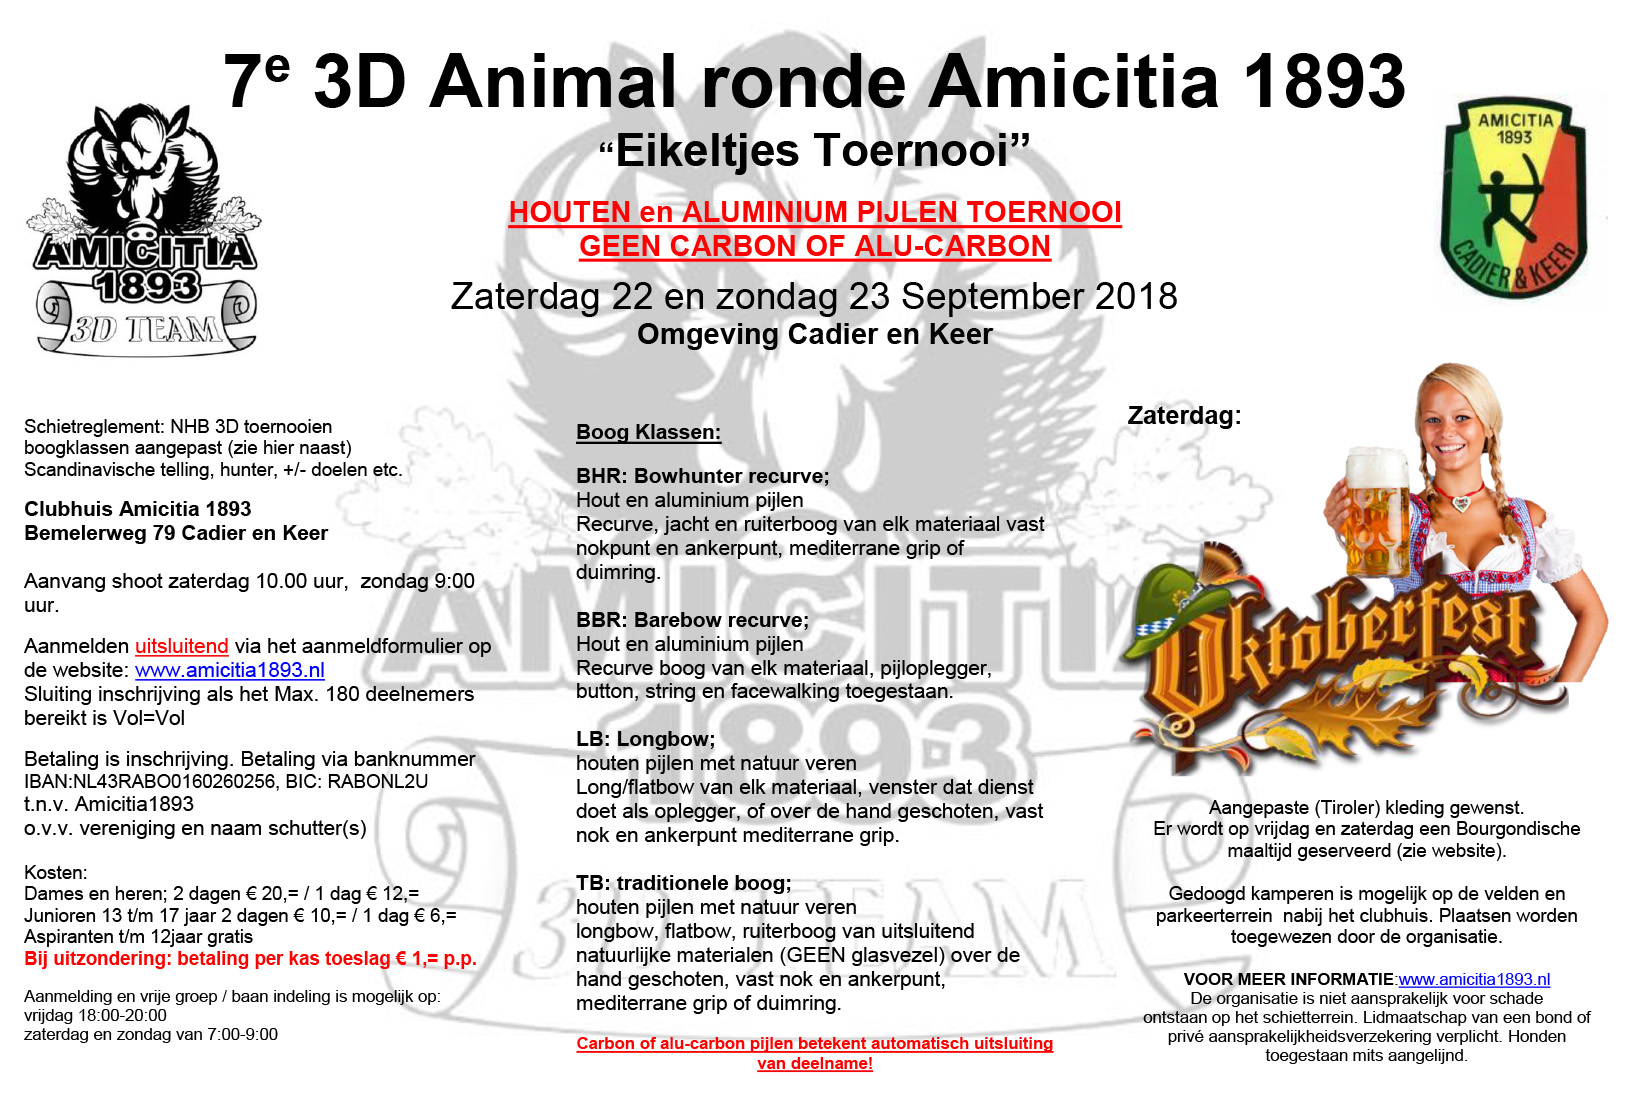 7e 3D Animal ronde Amicitia 1893 @ Clubhuis Amicitia 1893